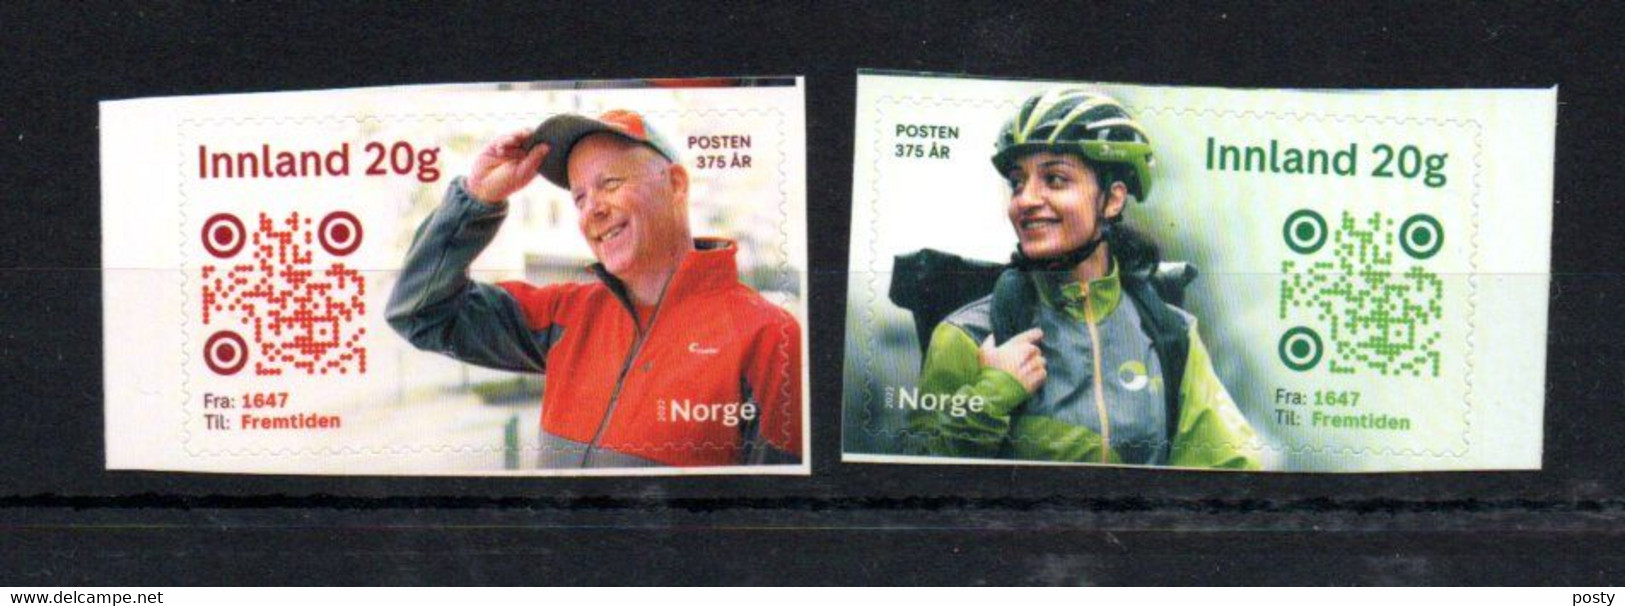 NORVEGE - NORWAY - 2022 - FACTEUR - MAILMAN - 375éme ANNIVERSAIRE - 375th ANNIVERSARY - - Nuevos